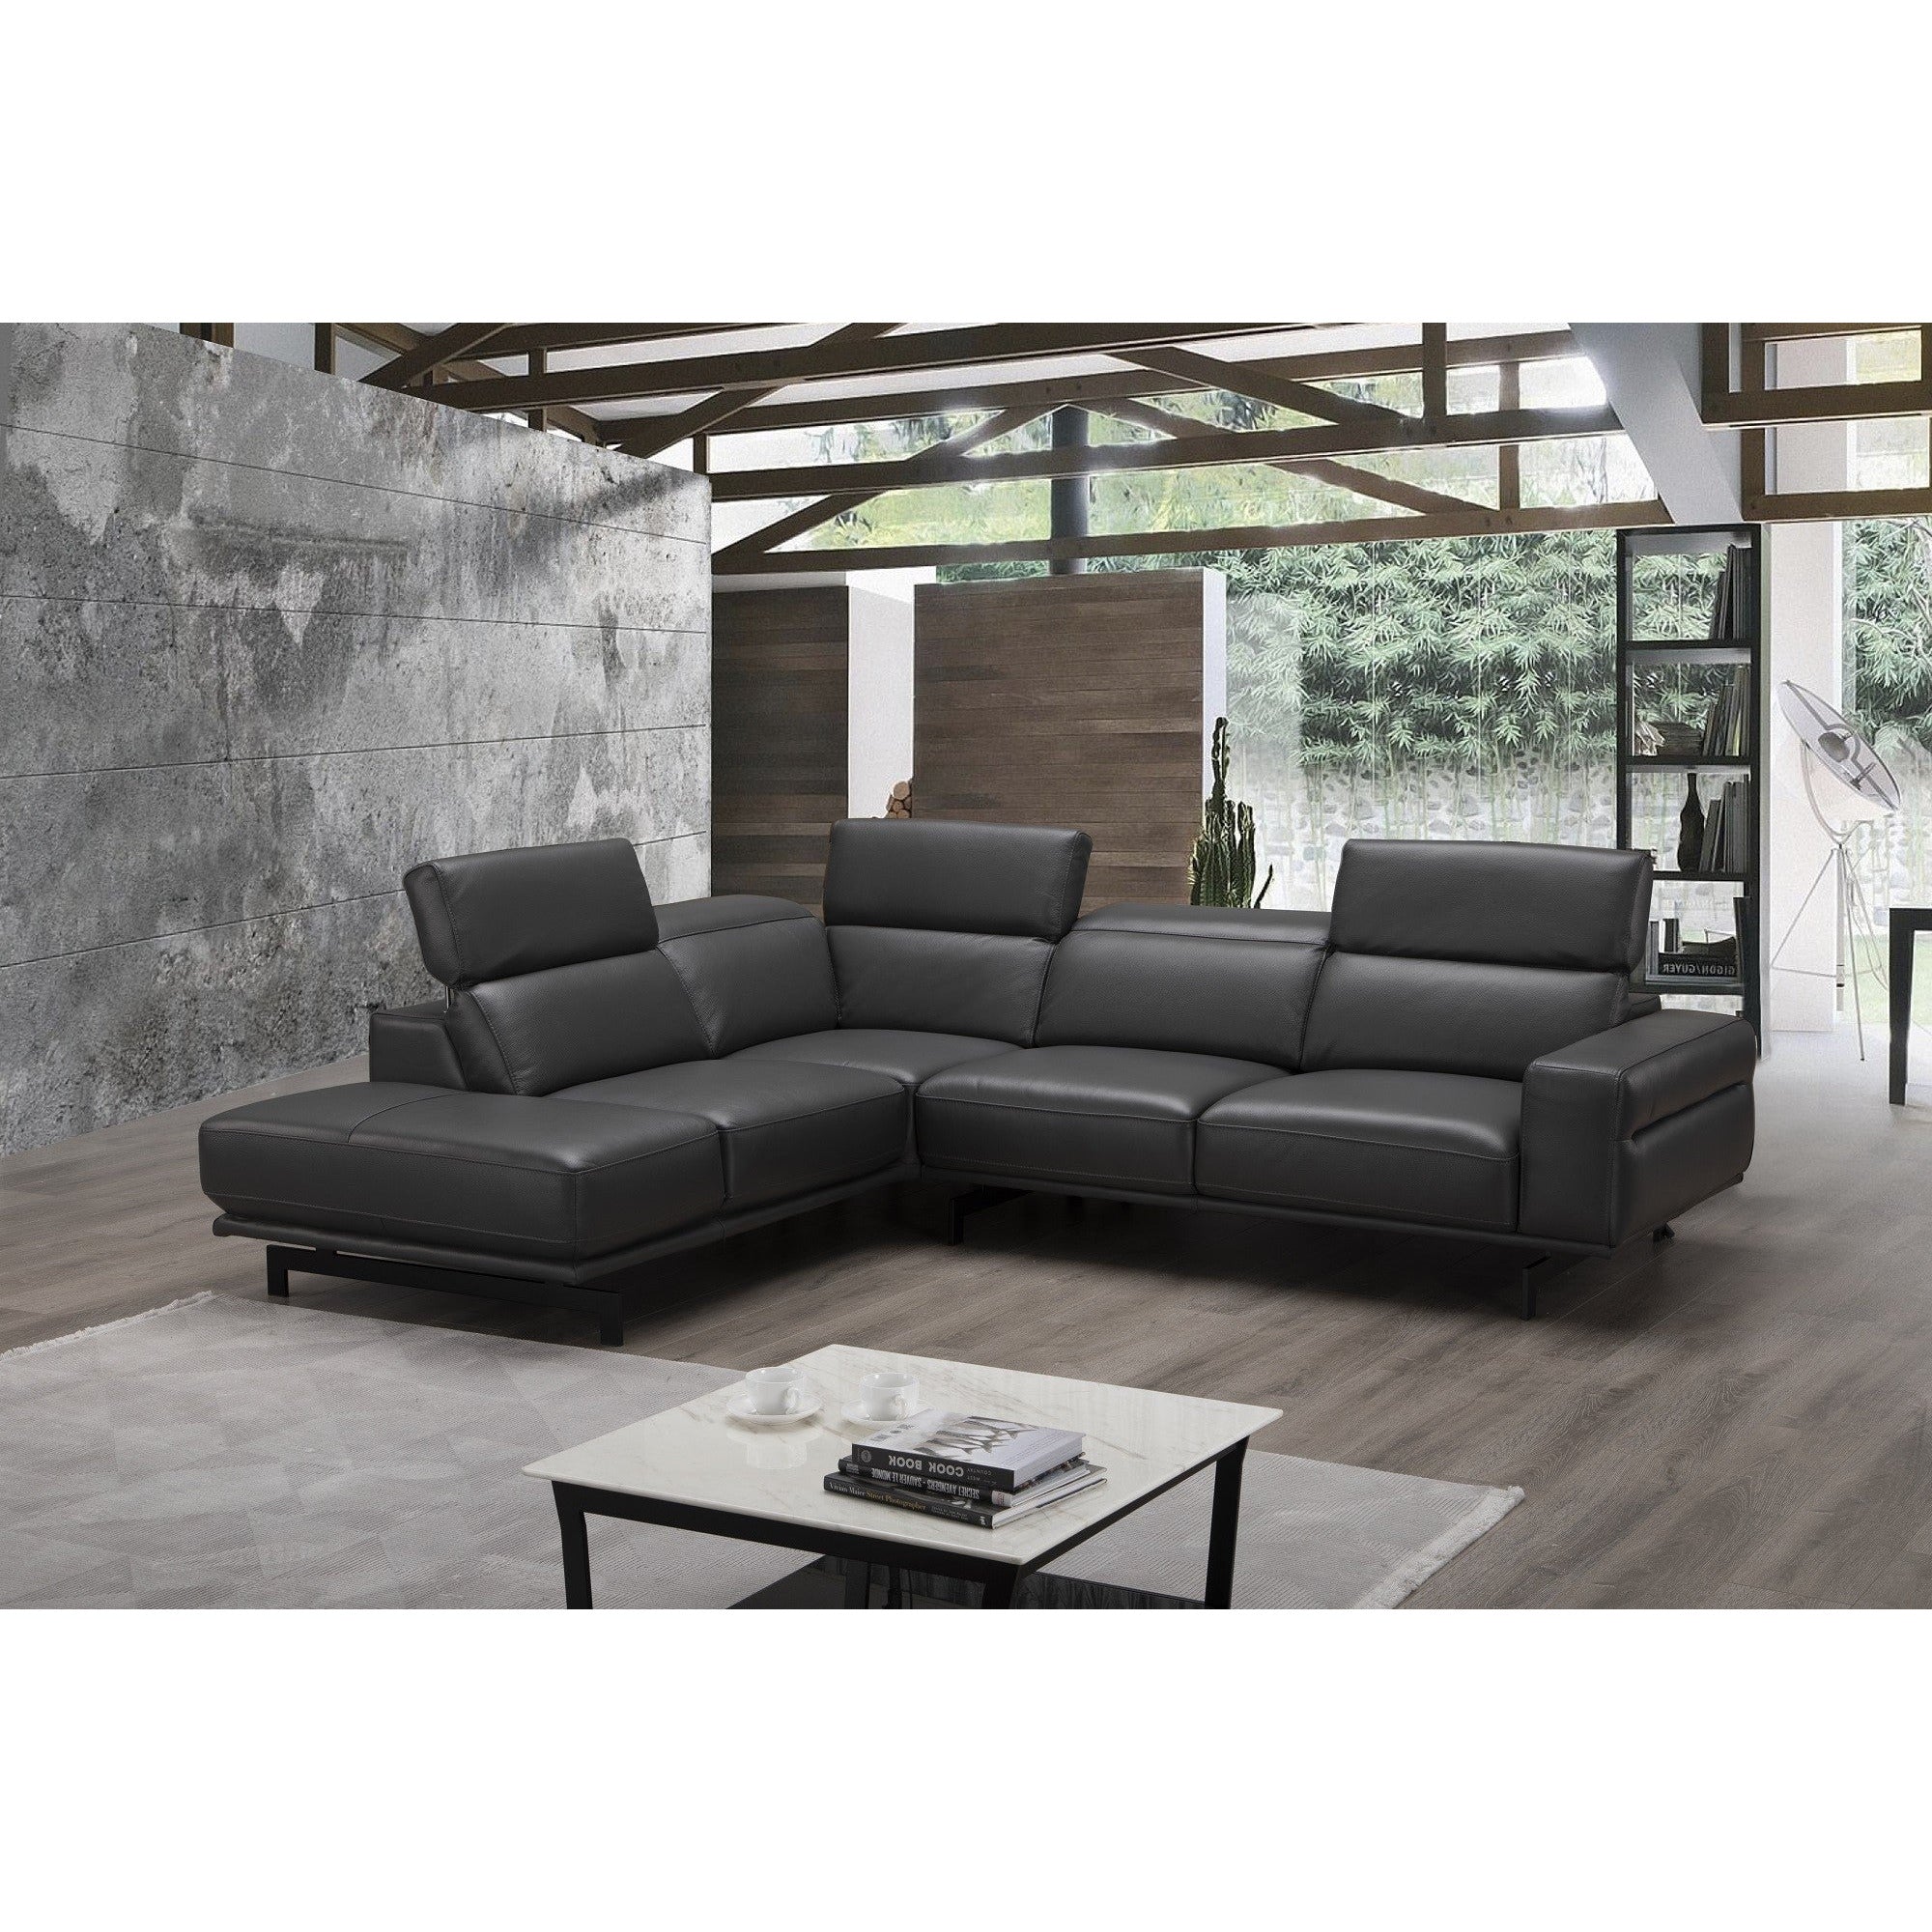 J&M Furniture Davenport Leather Sectional in Slate (SKU18875)